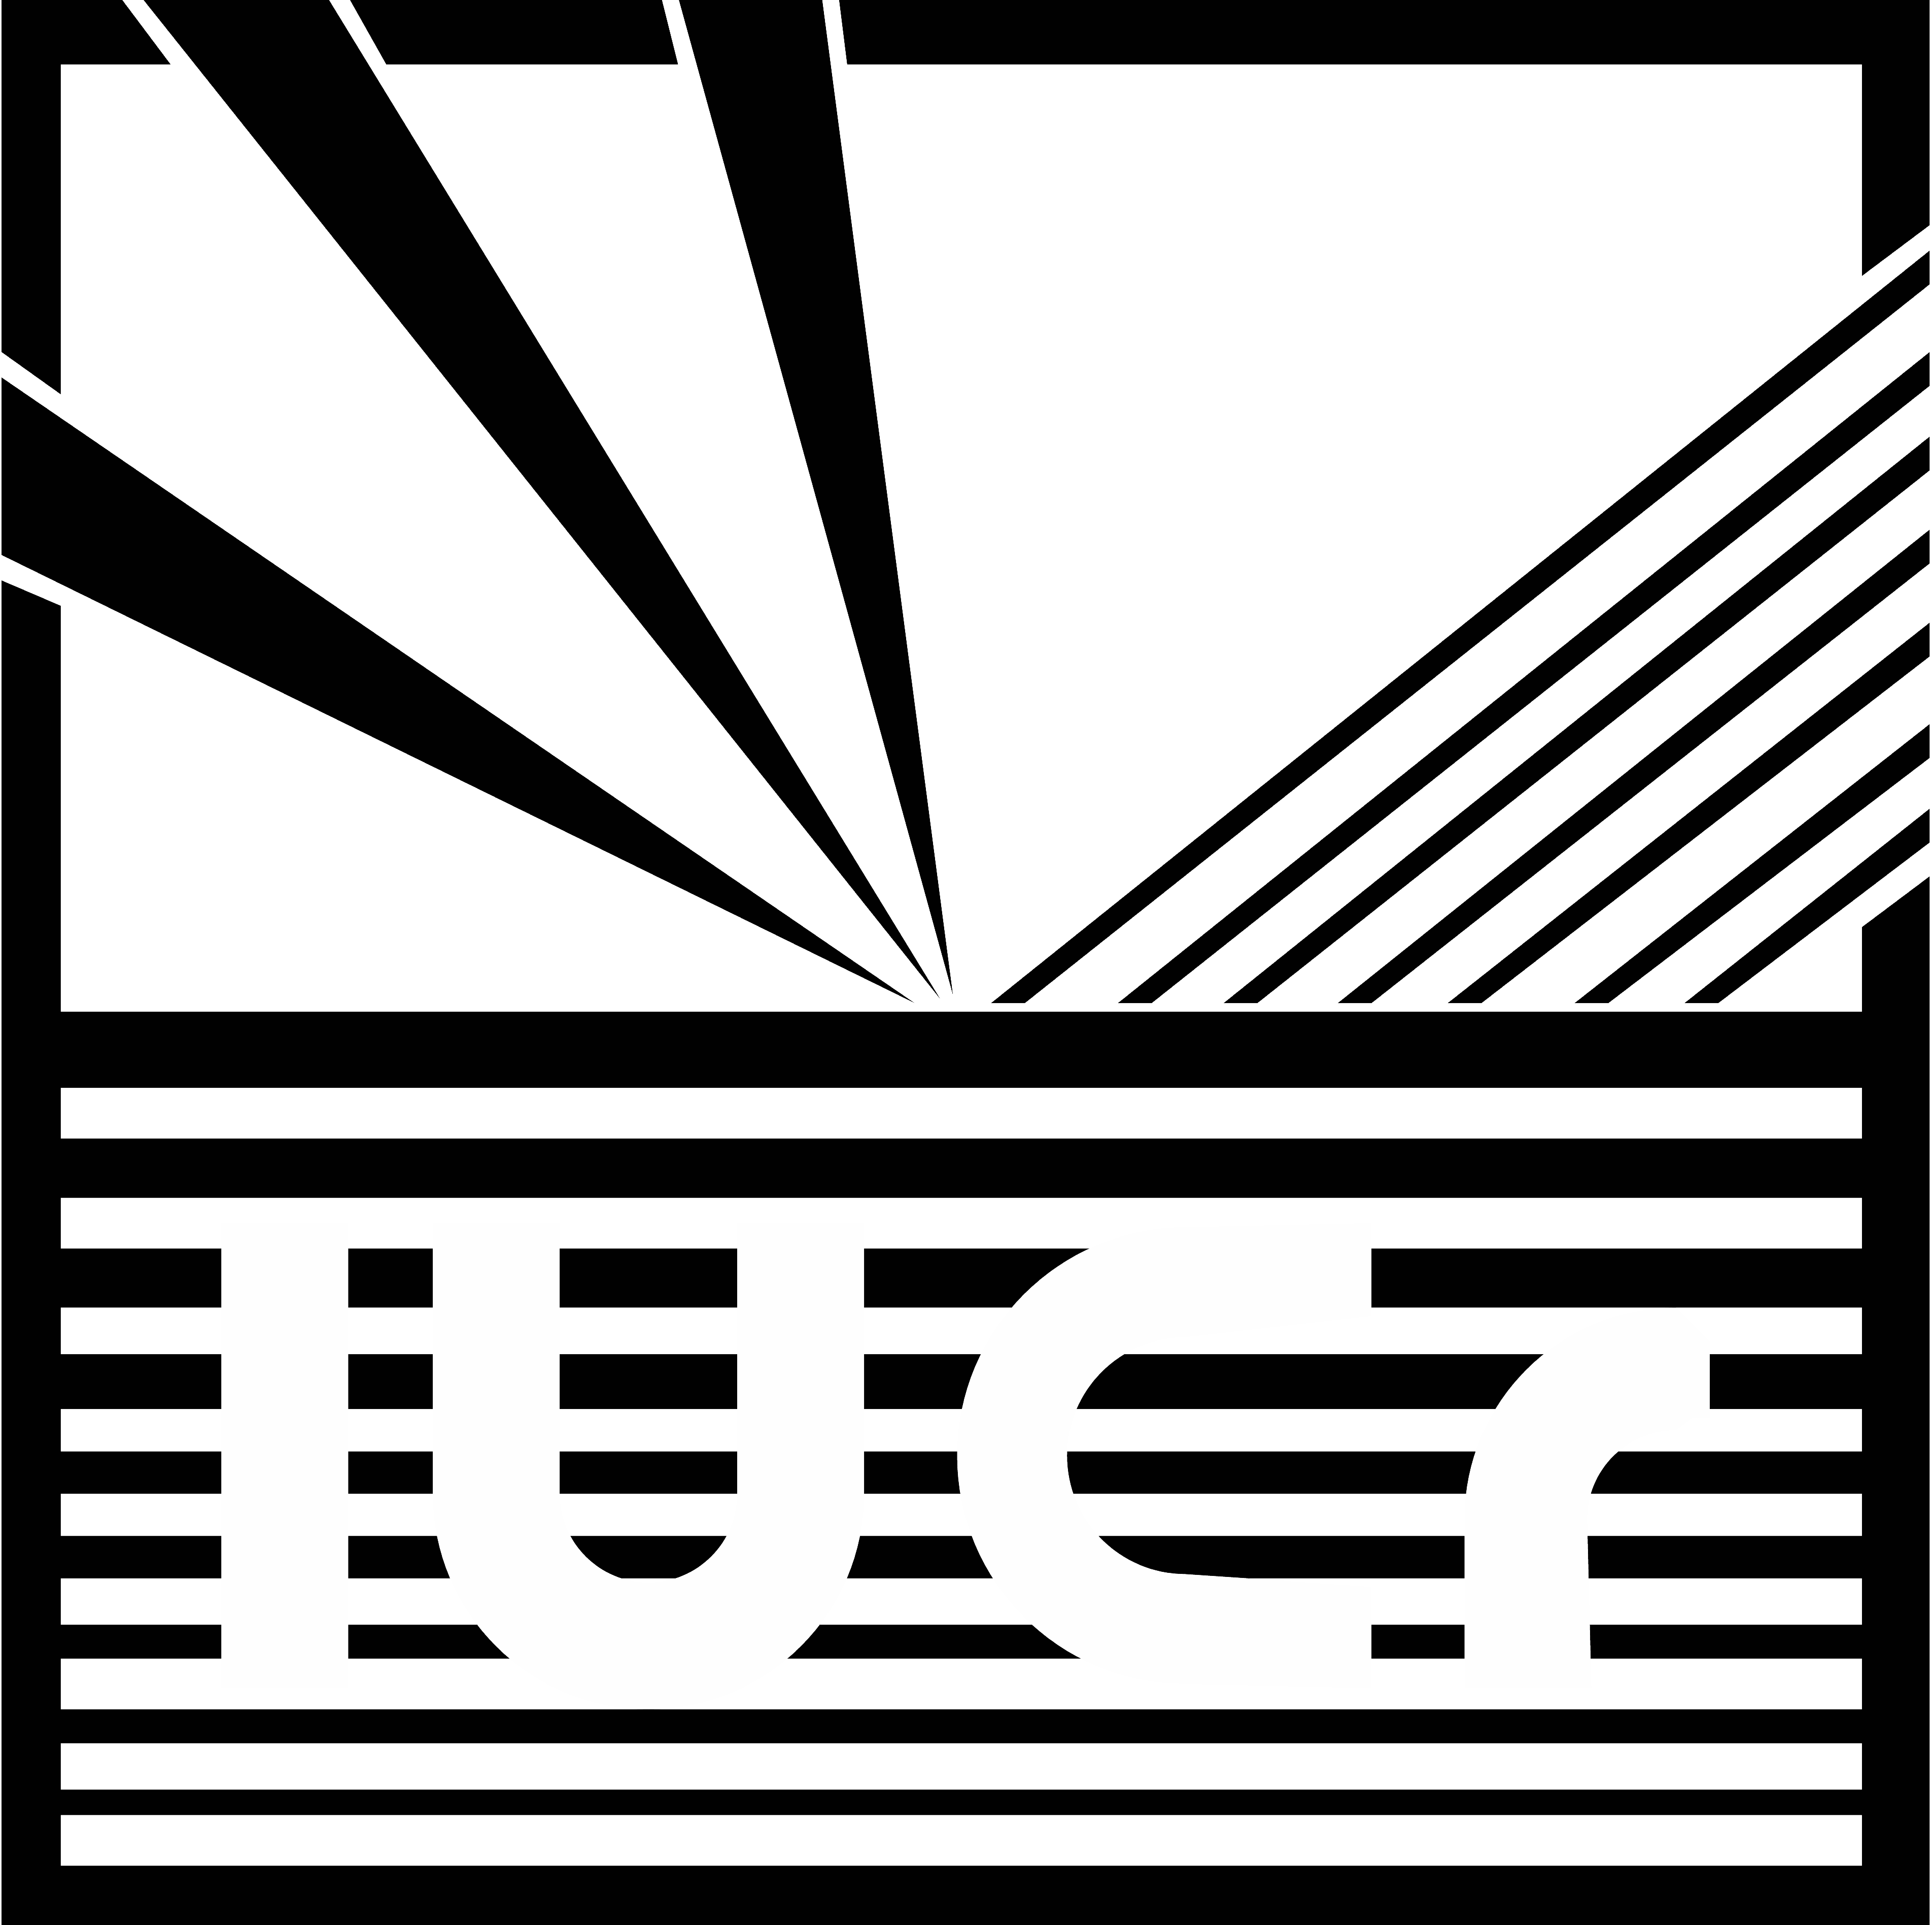 International Union of Crystallography logo